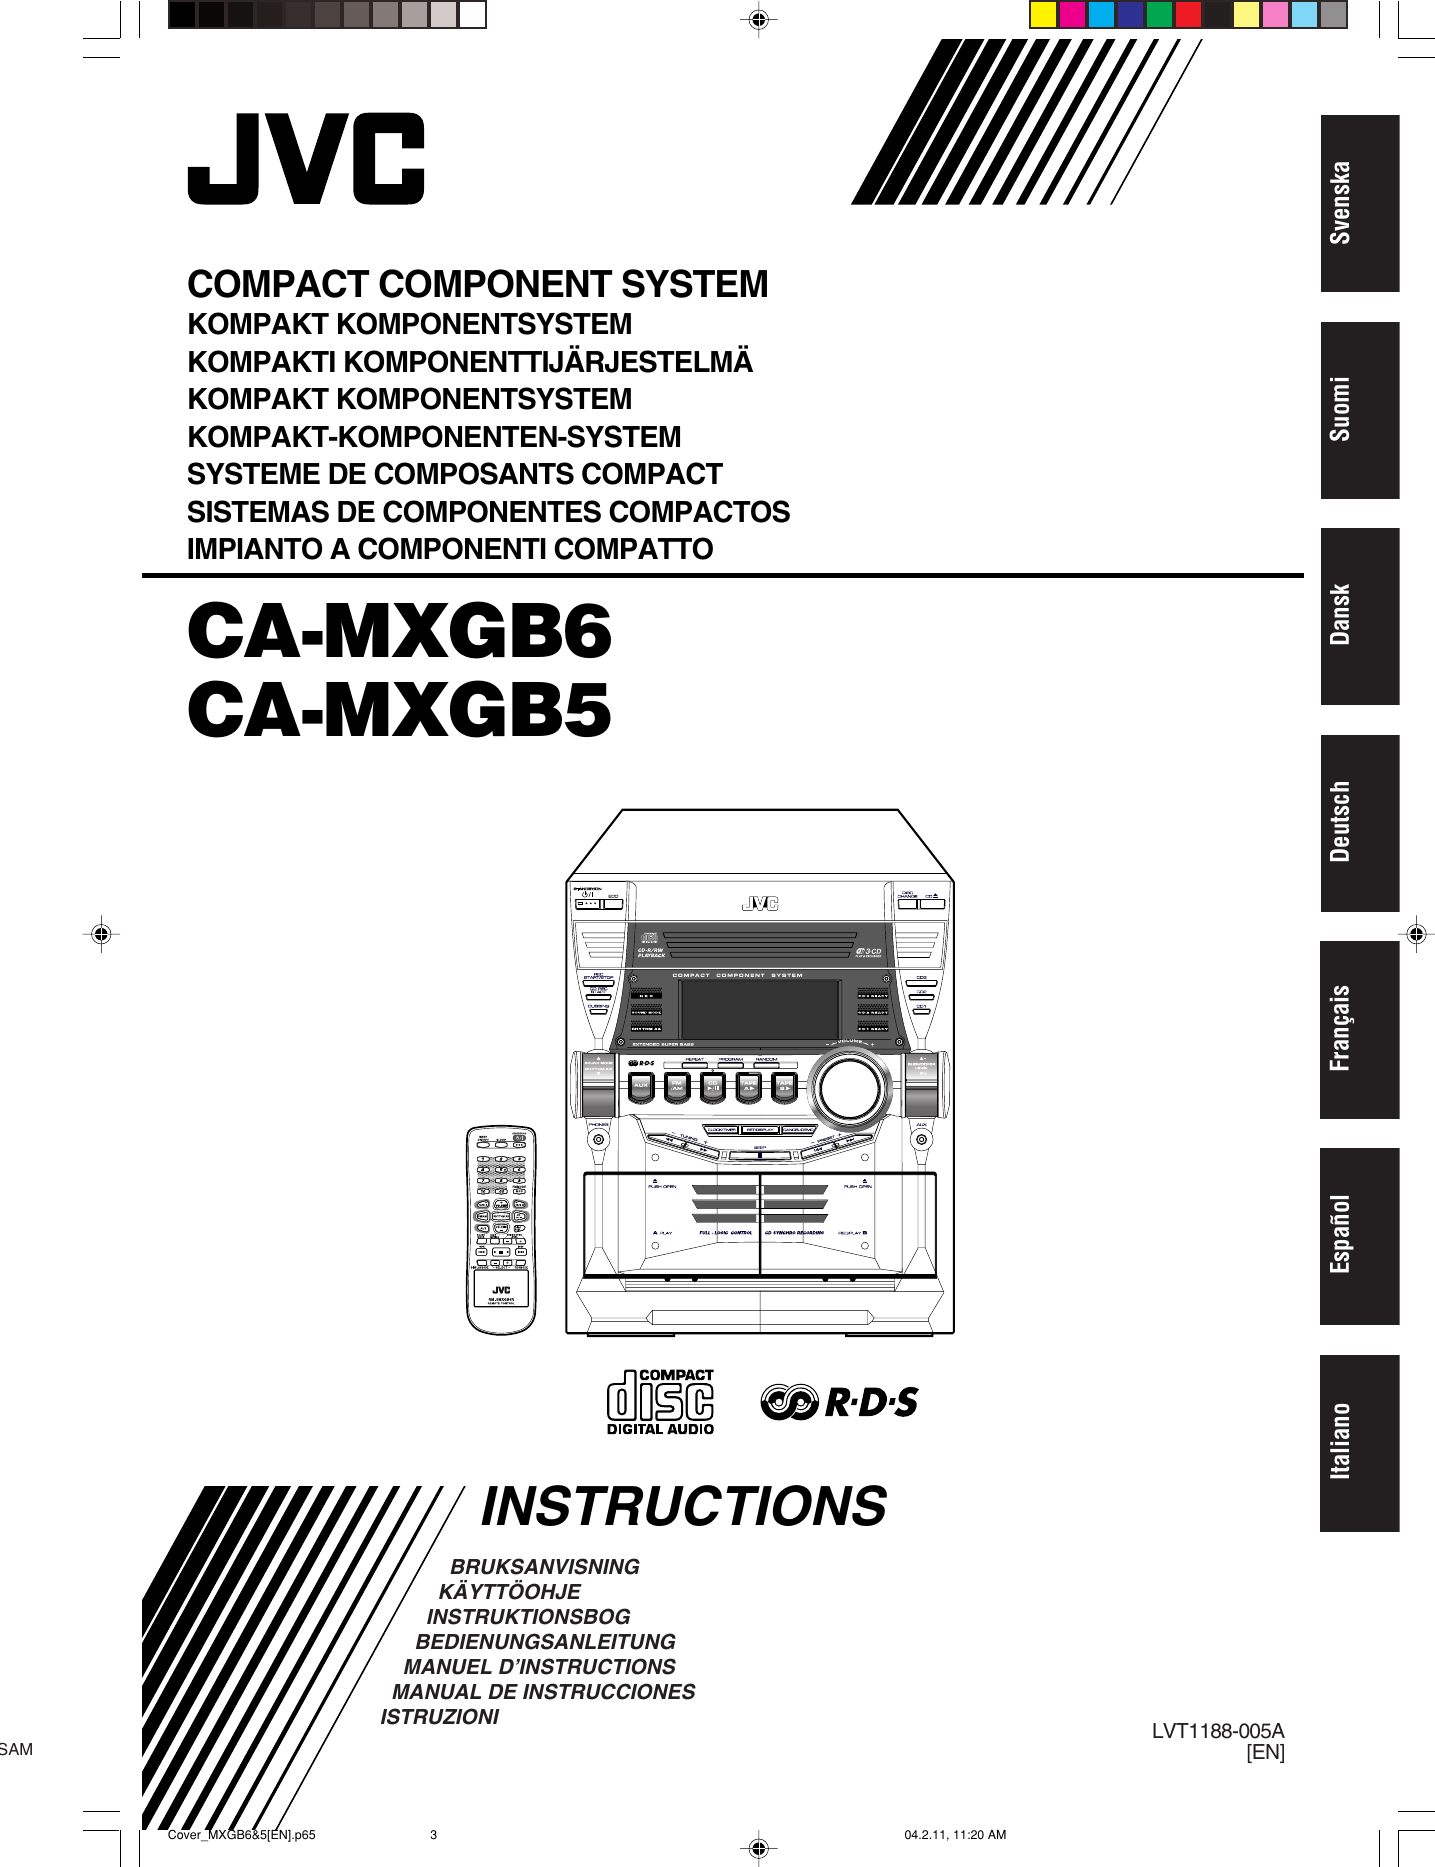 JVC CA MXGB5 MXGB6/MXGB5[EN] User Manual MXGB5, MXGB6 LVT1188 005A